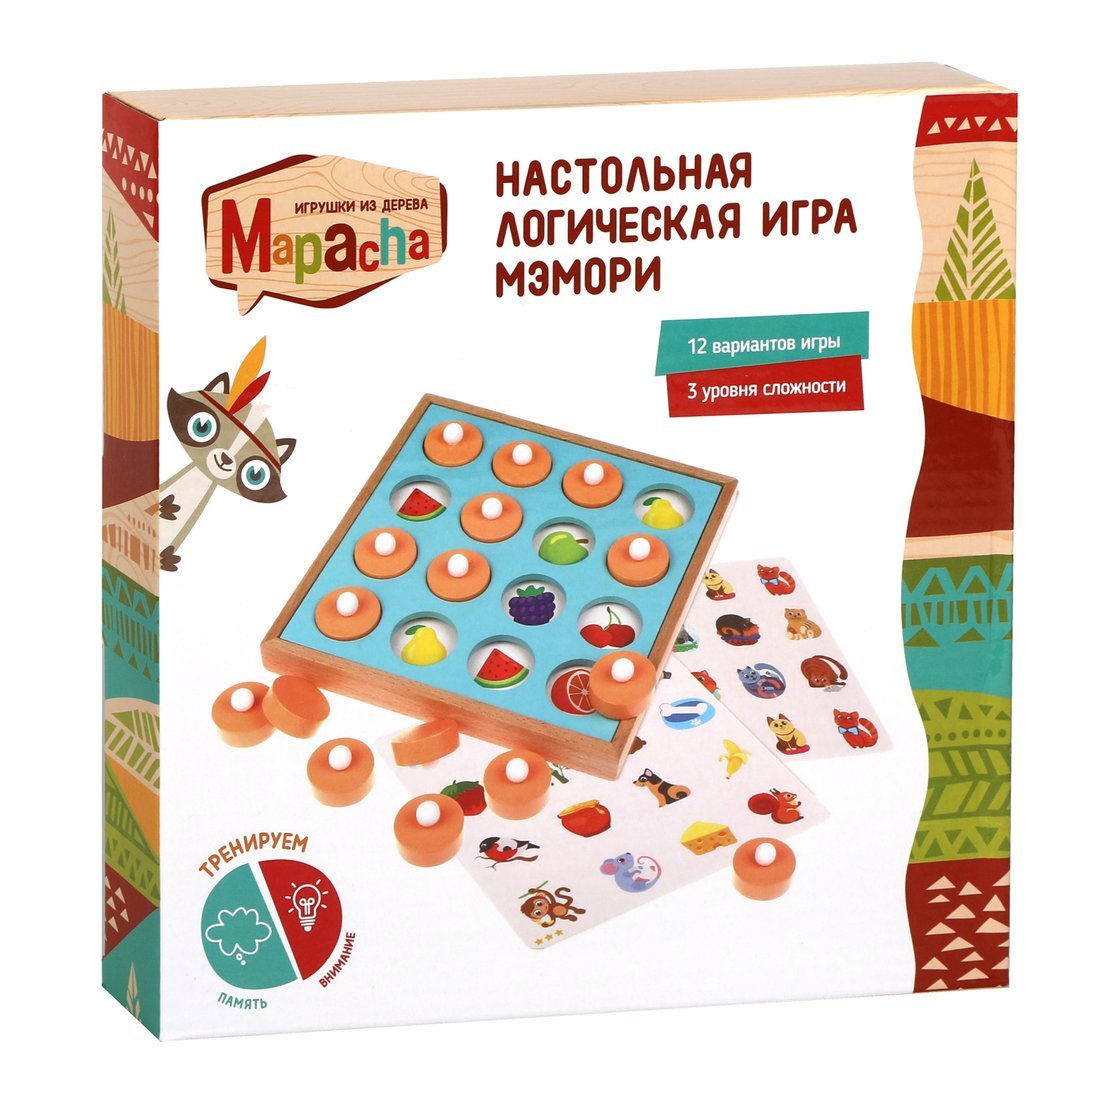 Игра 76844 Мэмори на тренировку памяти Mapacha - Нижний Новгород 